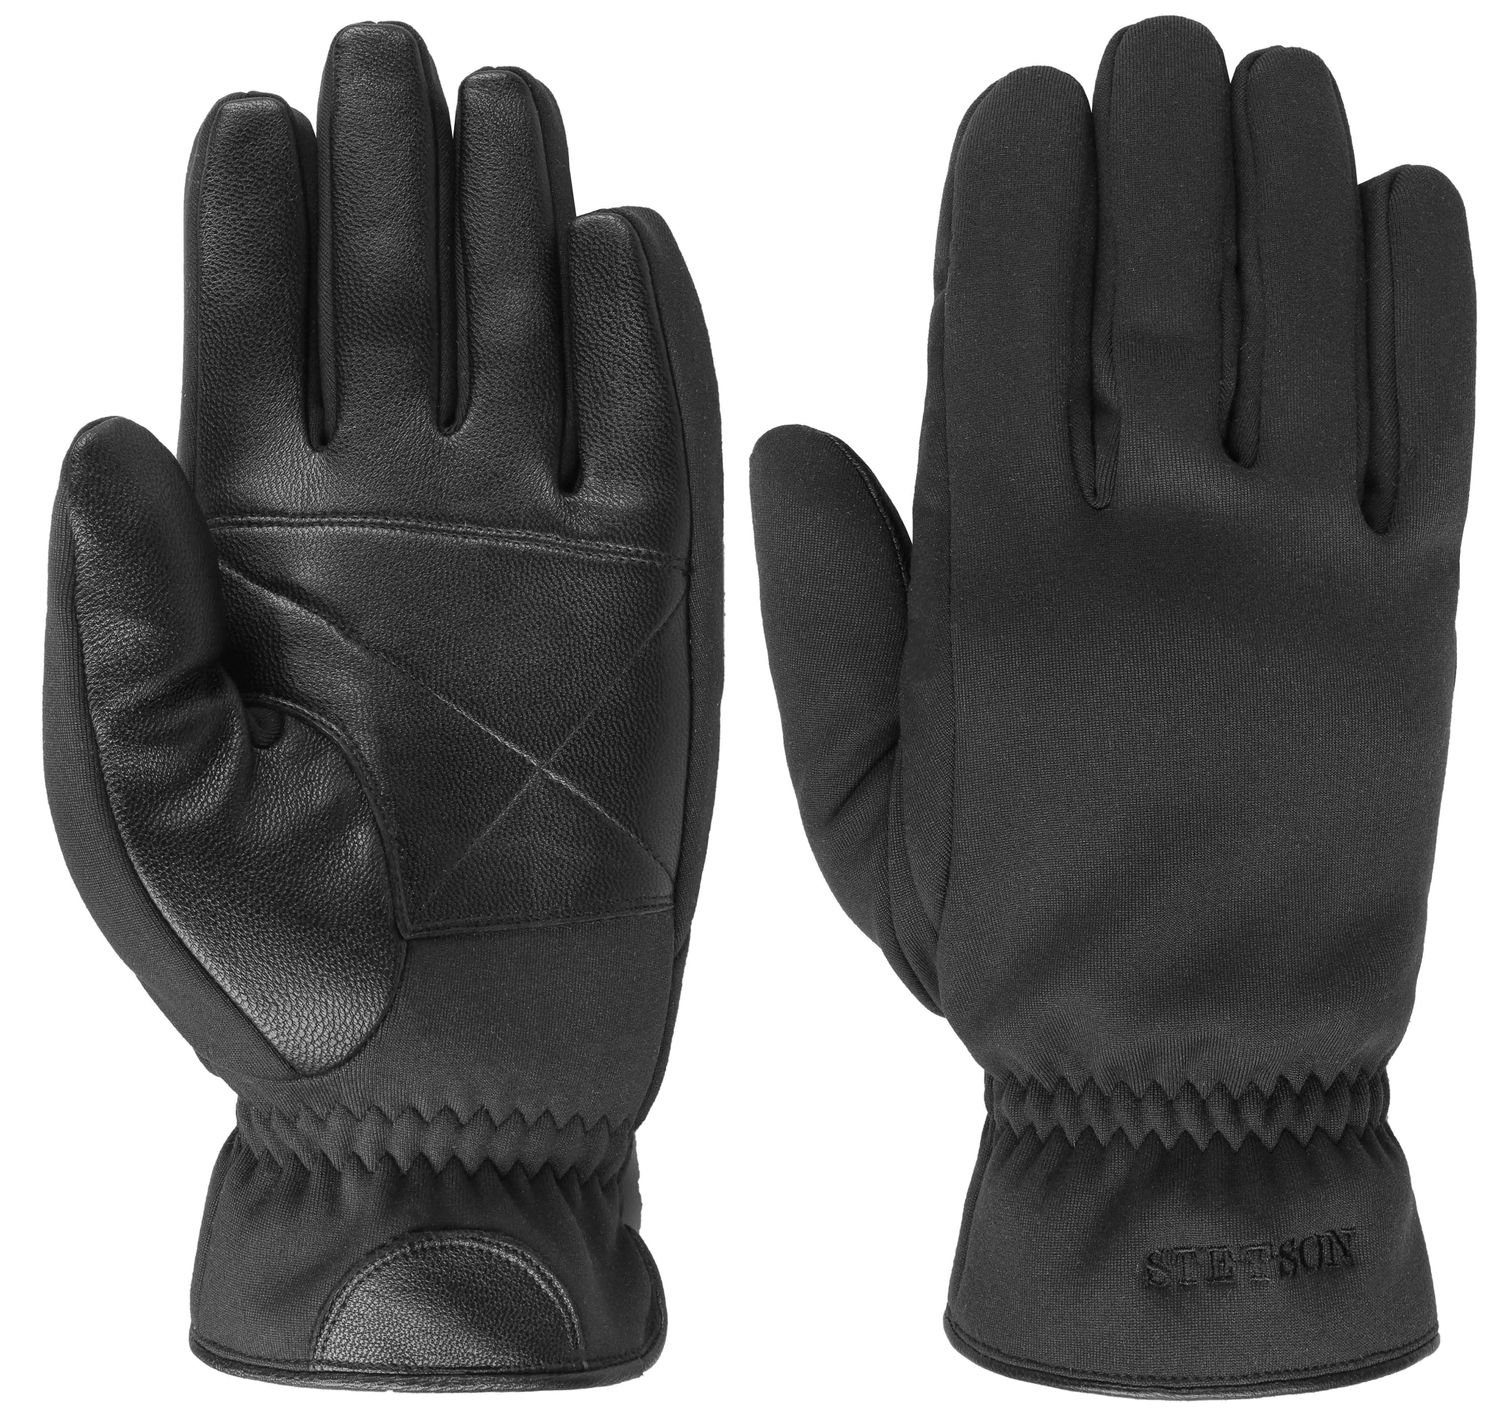 Stetson Lederhandschuhe Handschuhe/Gloves Soft Shell Conductive Goat Nappa  online kaufen | OTTO